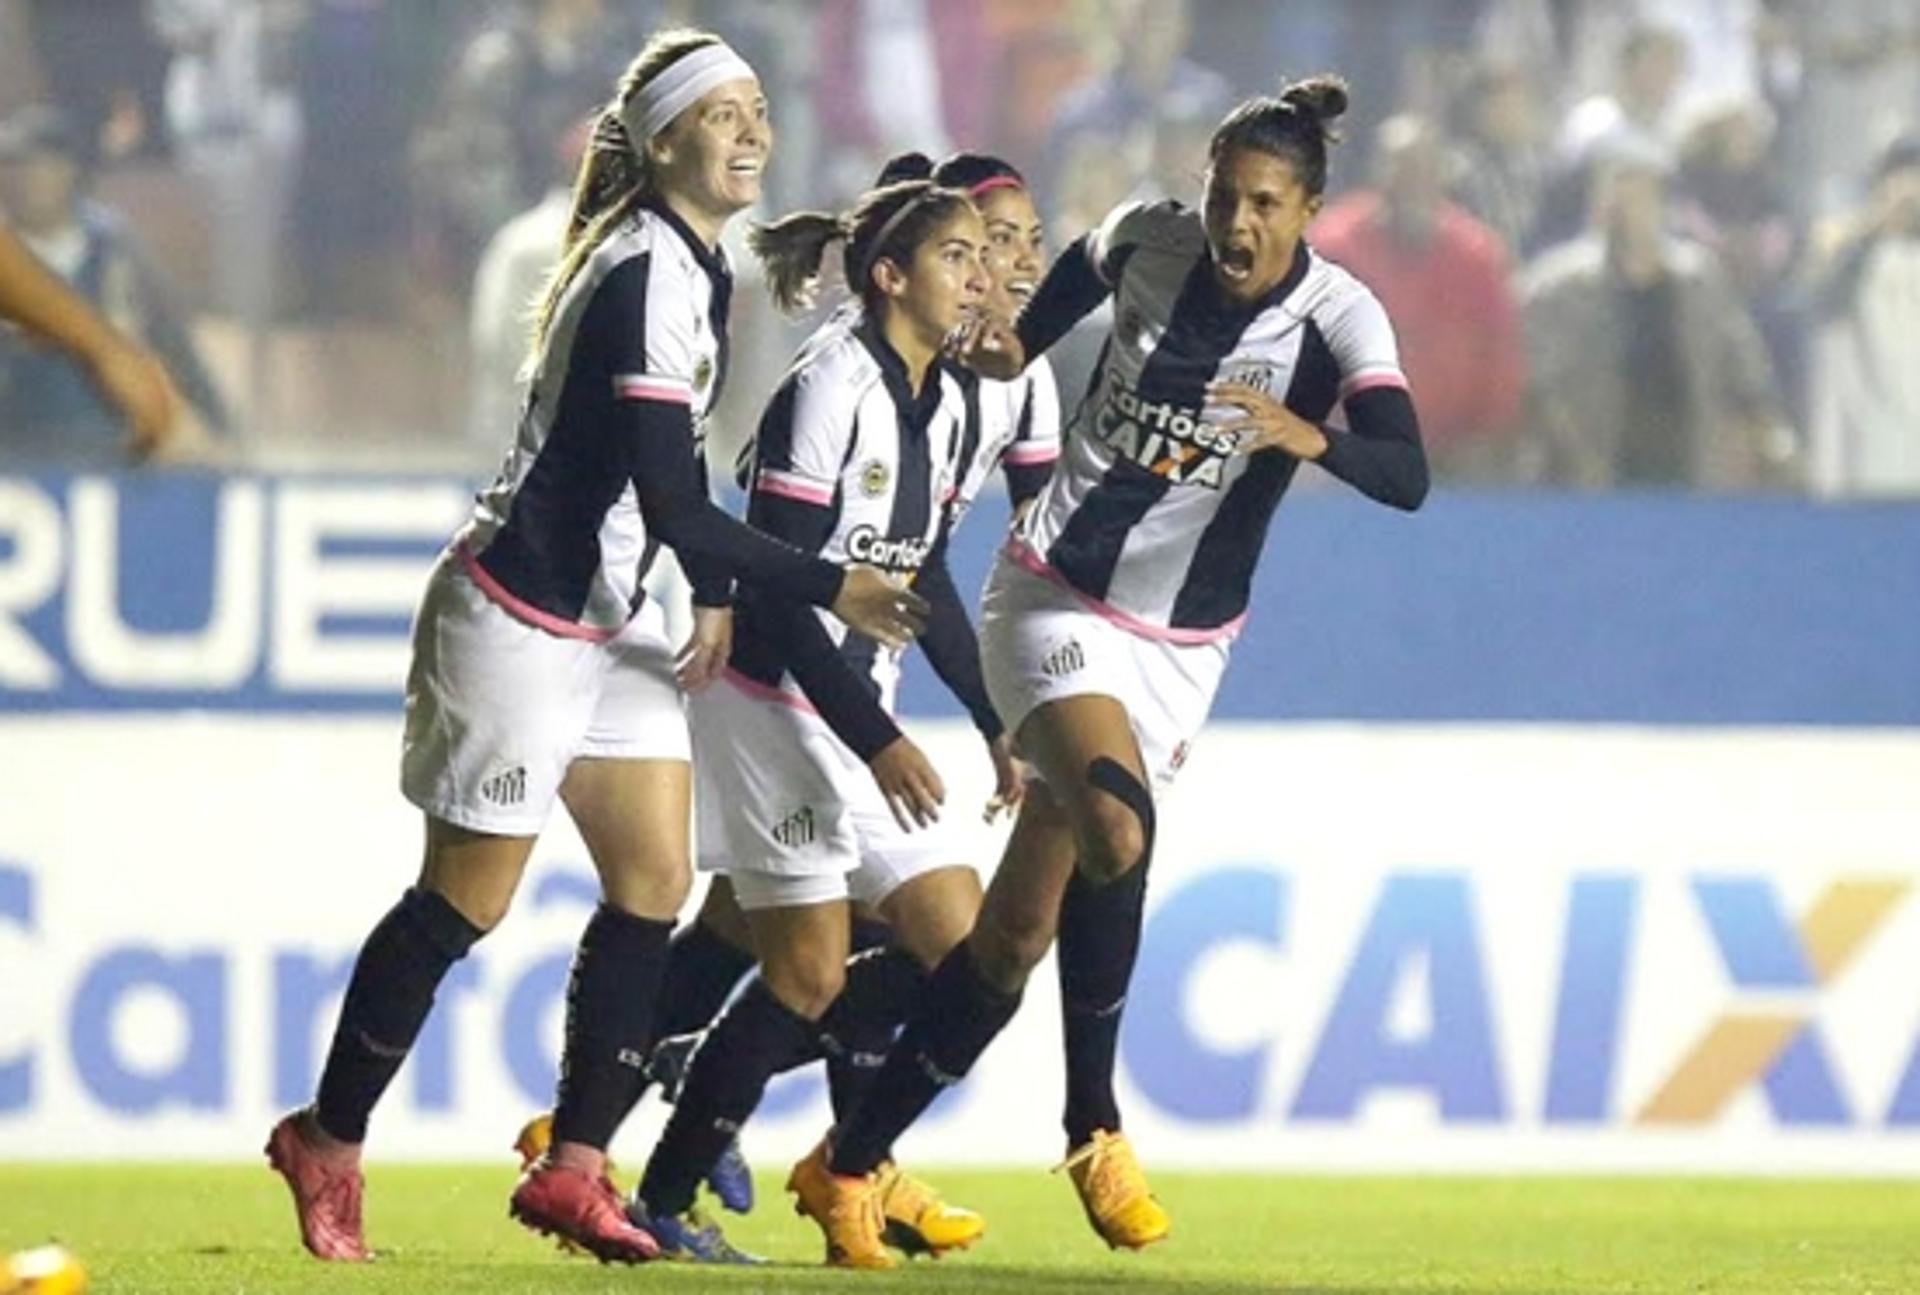 Santos x Corinthians - Futebol Feminino